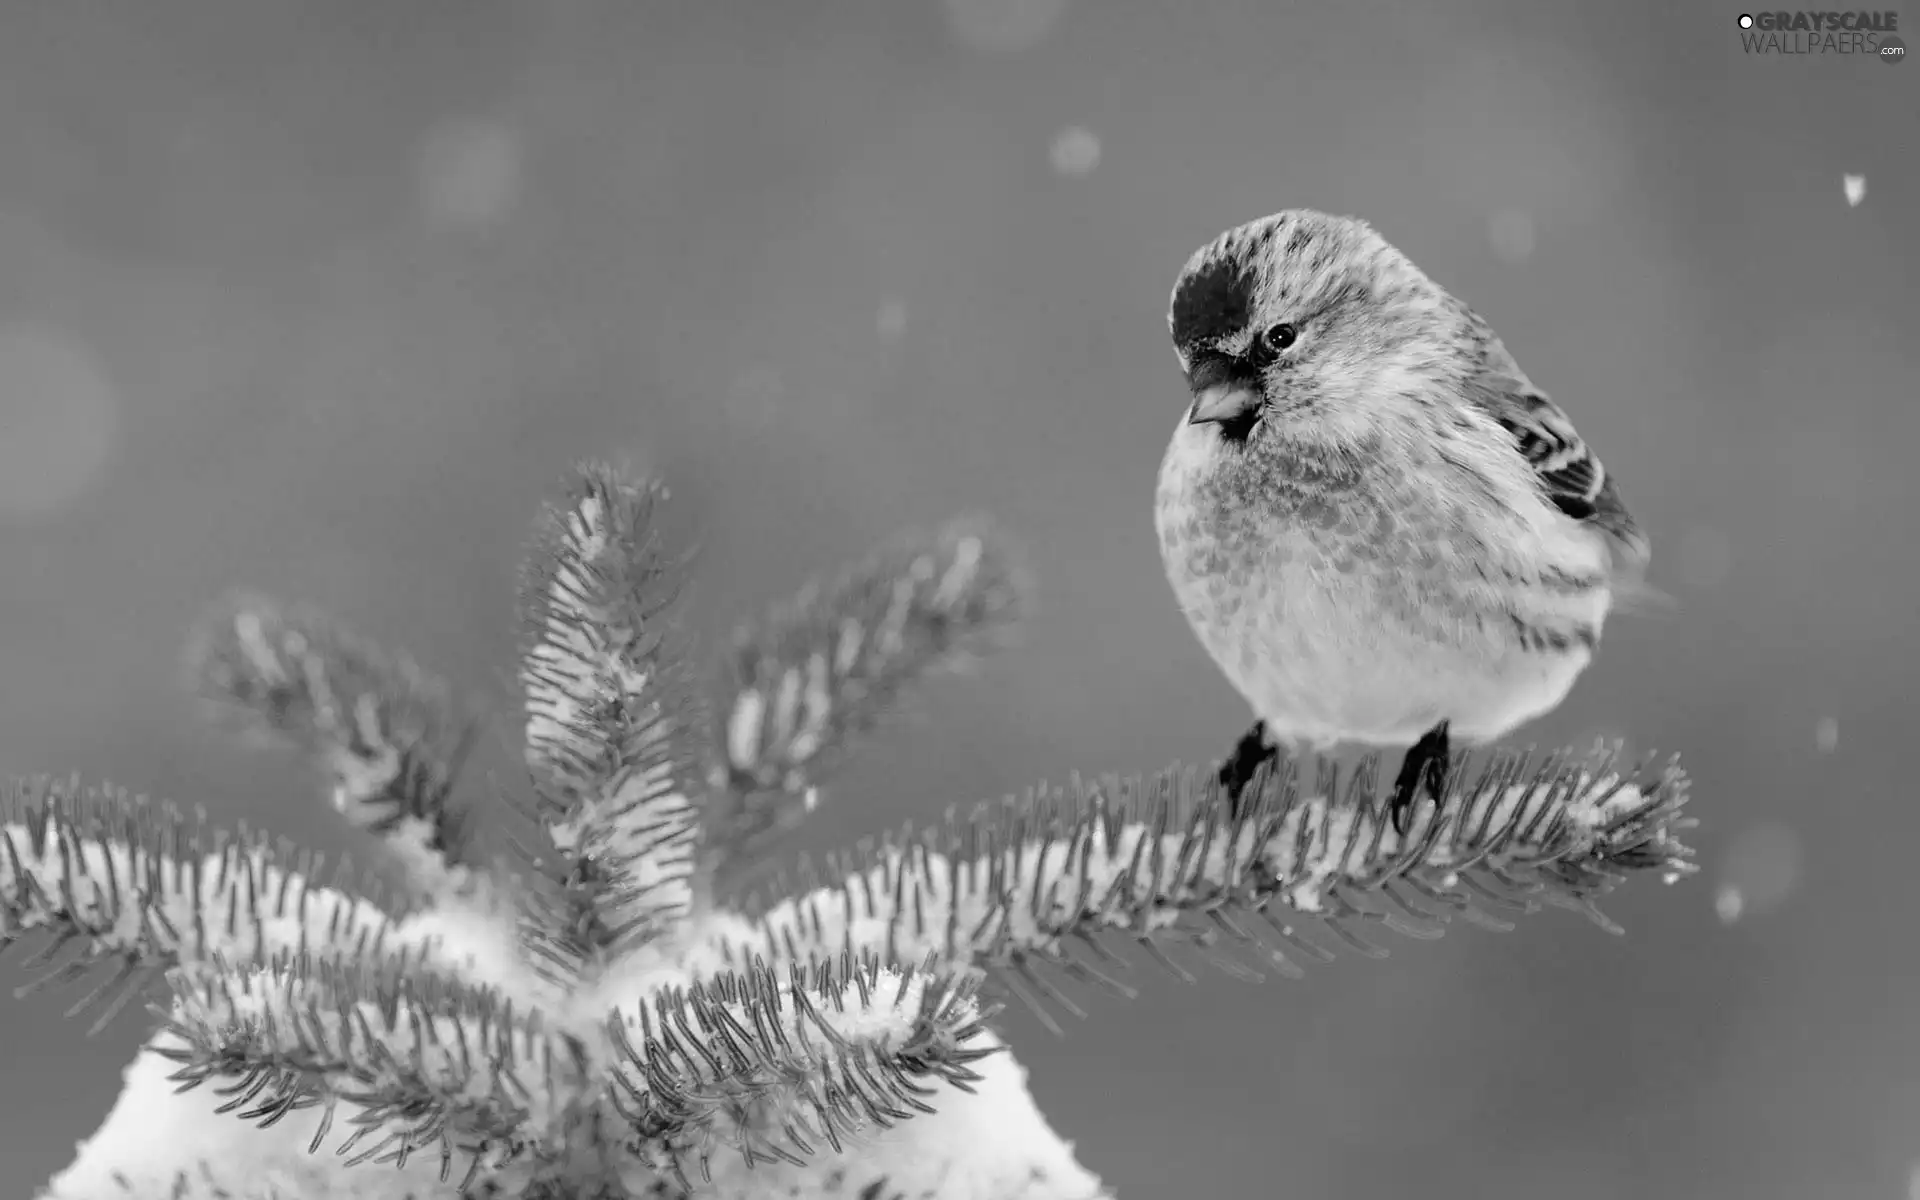 Bird, conifer, snow